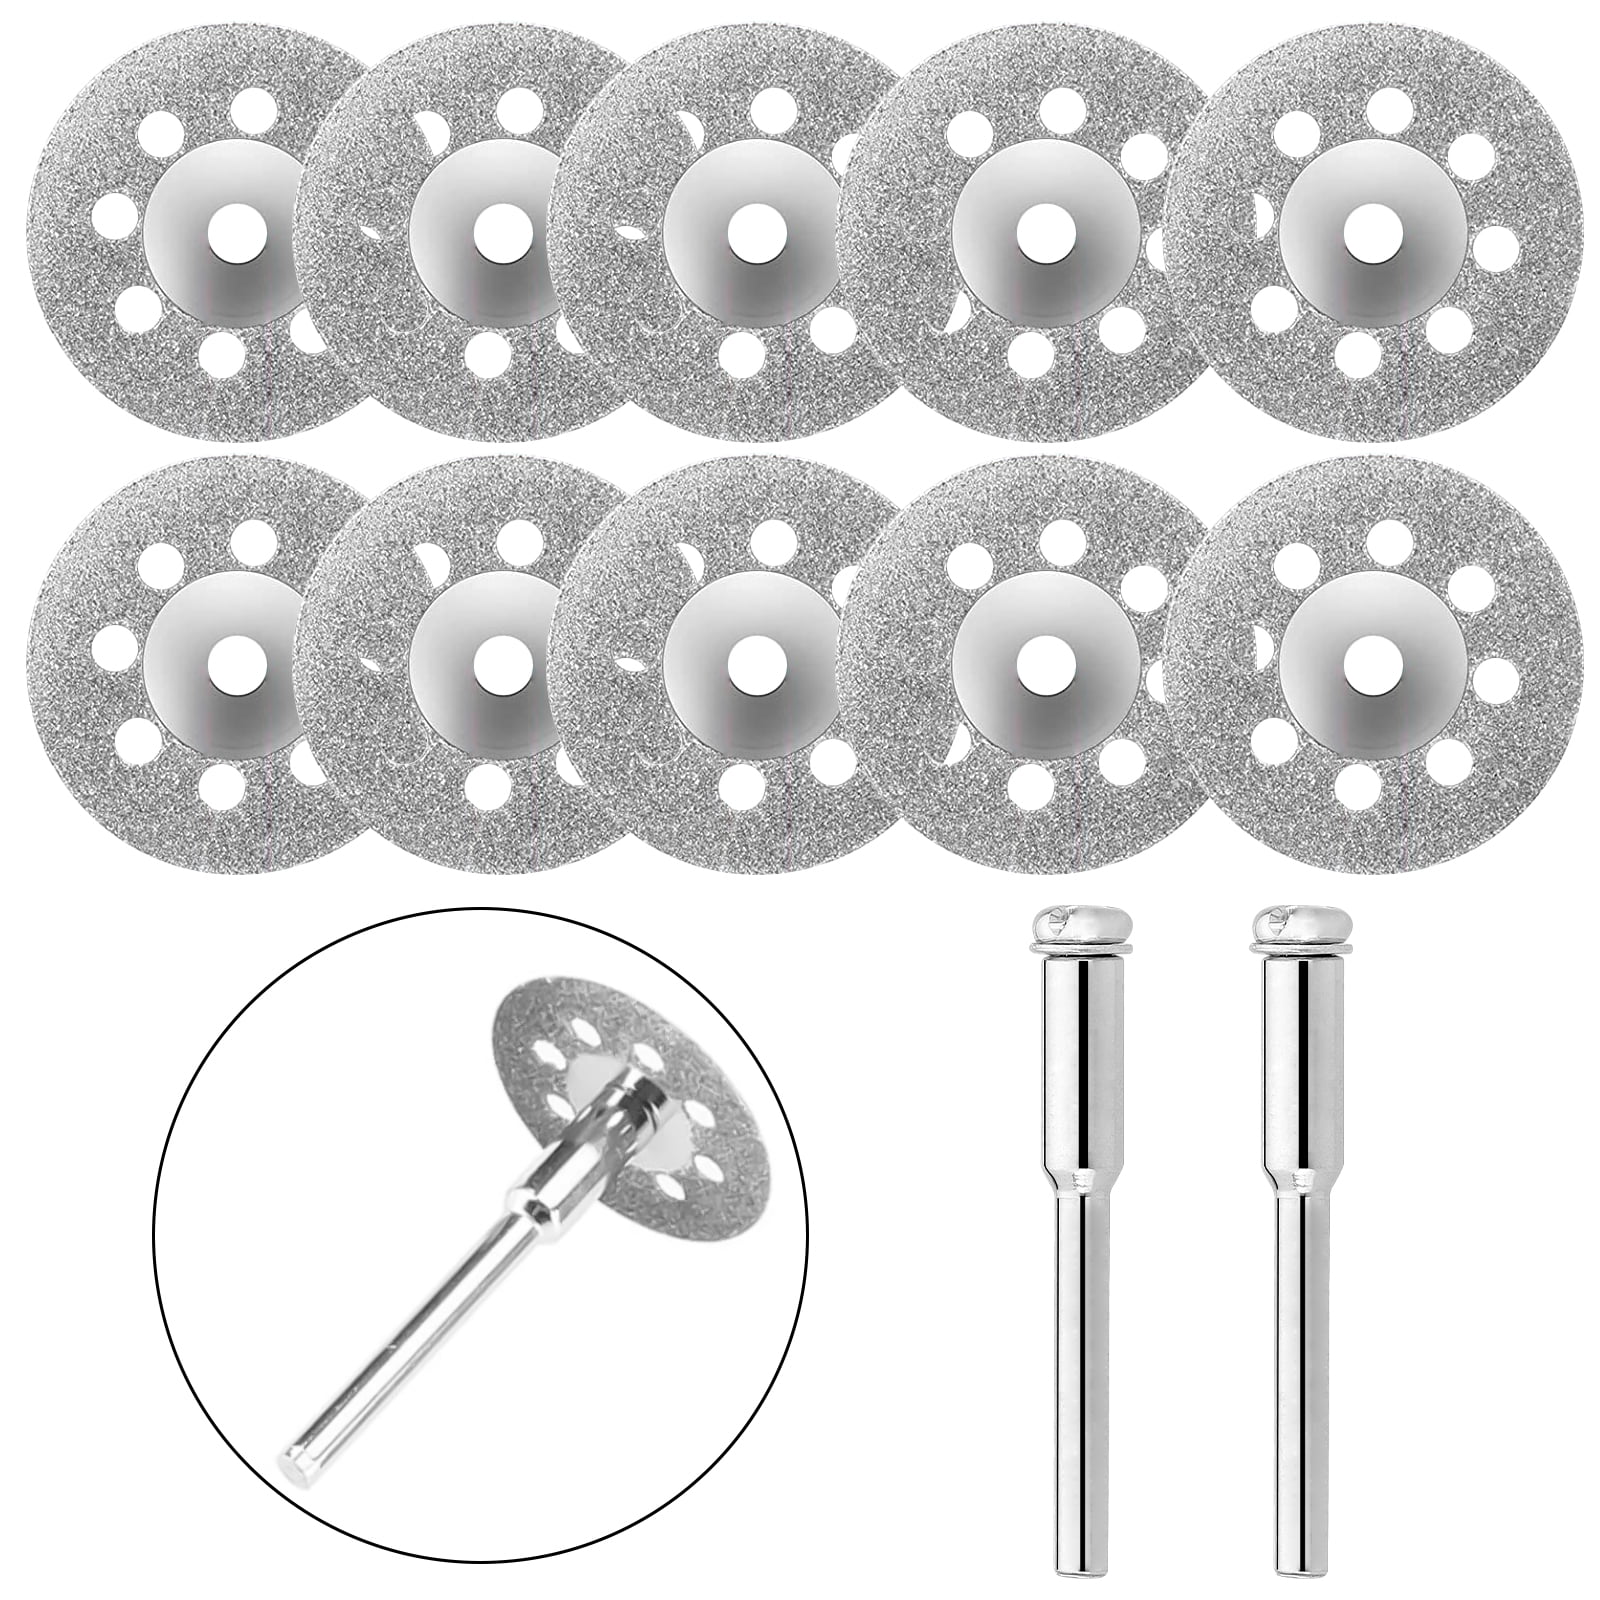 10PCS 40mm Diamond Coated Rotary Cutting Cut Off Blade Wheels Disc Kits New 